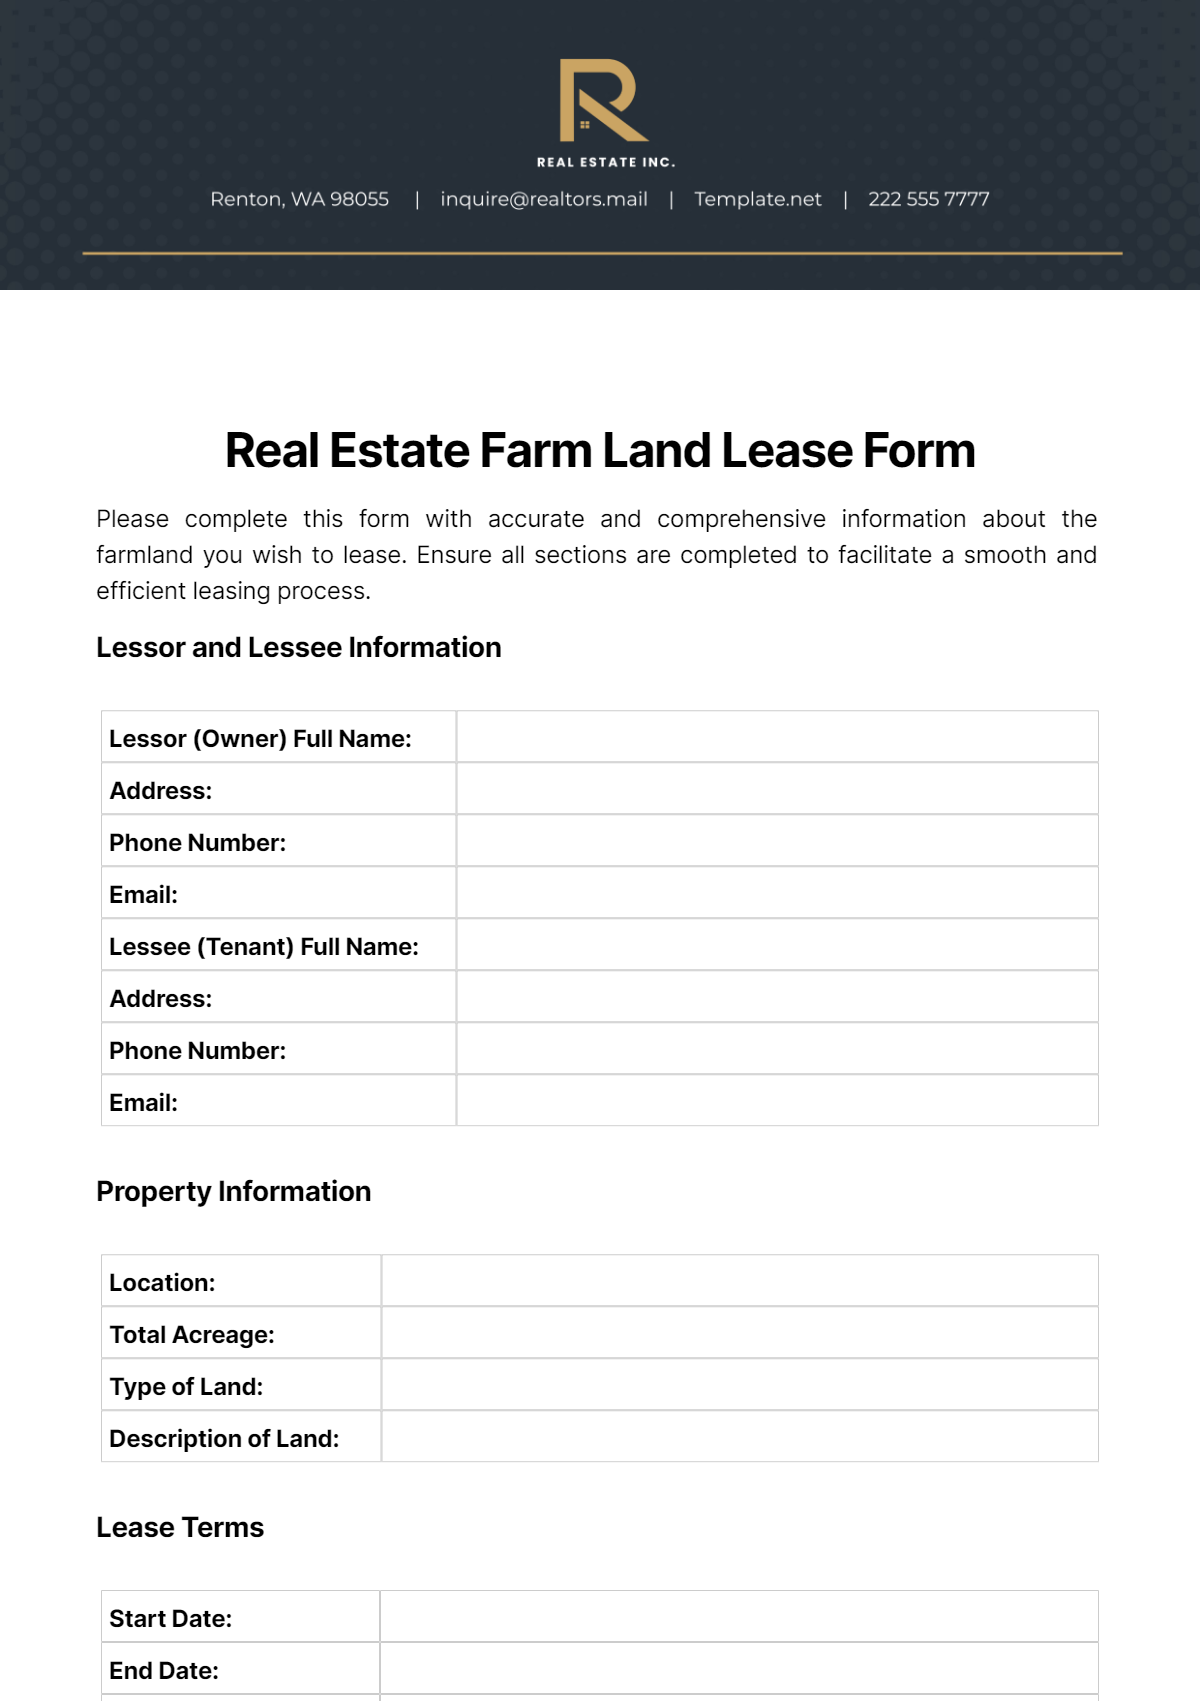 Real Estate Farm Land Lease Form Template